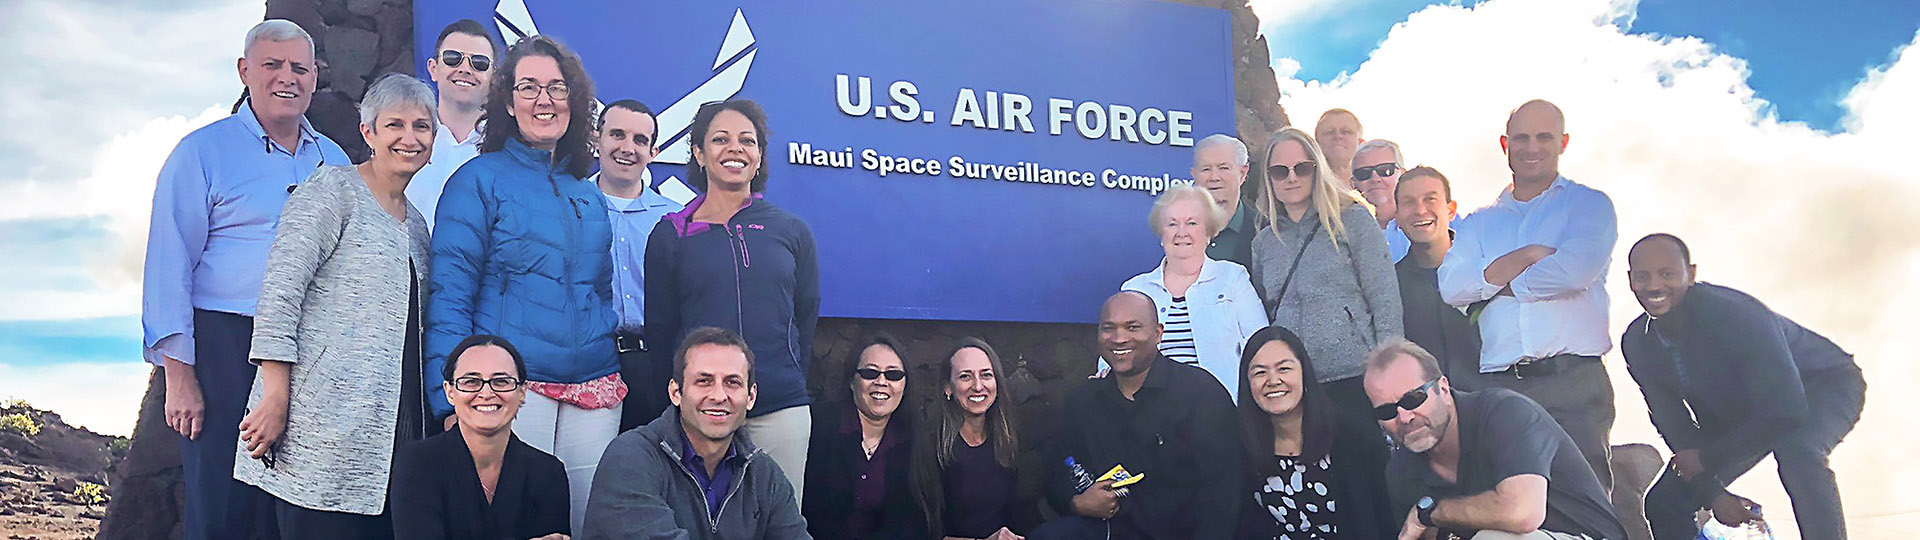 USAF Maui Space Surveillance Complex. Maui, HI